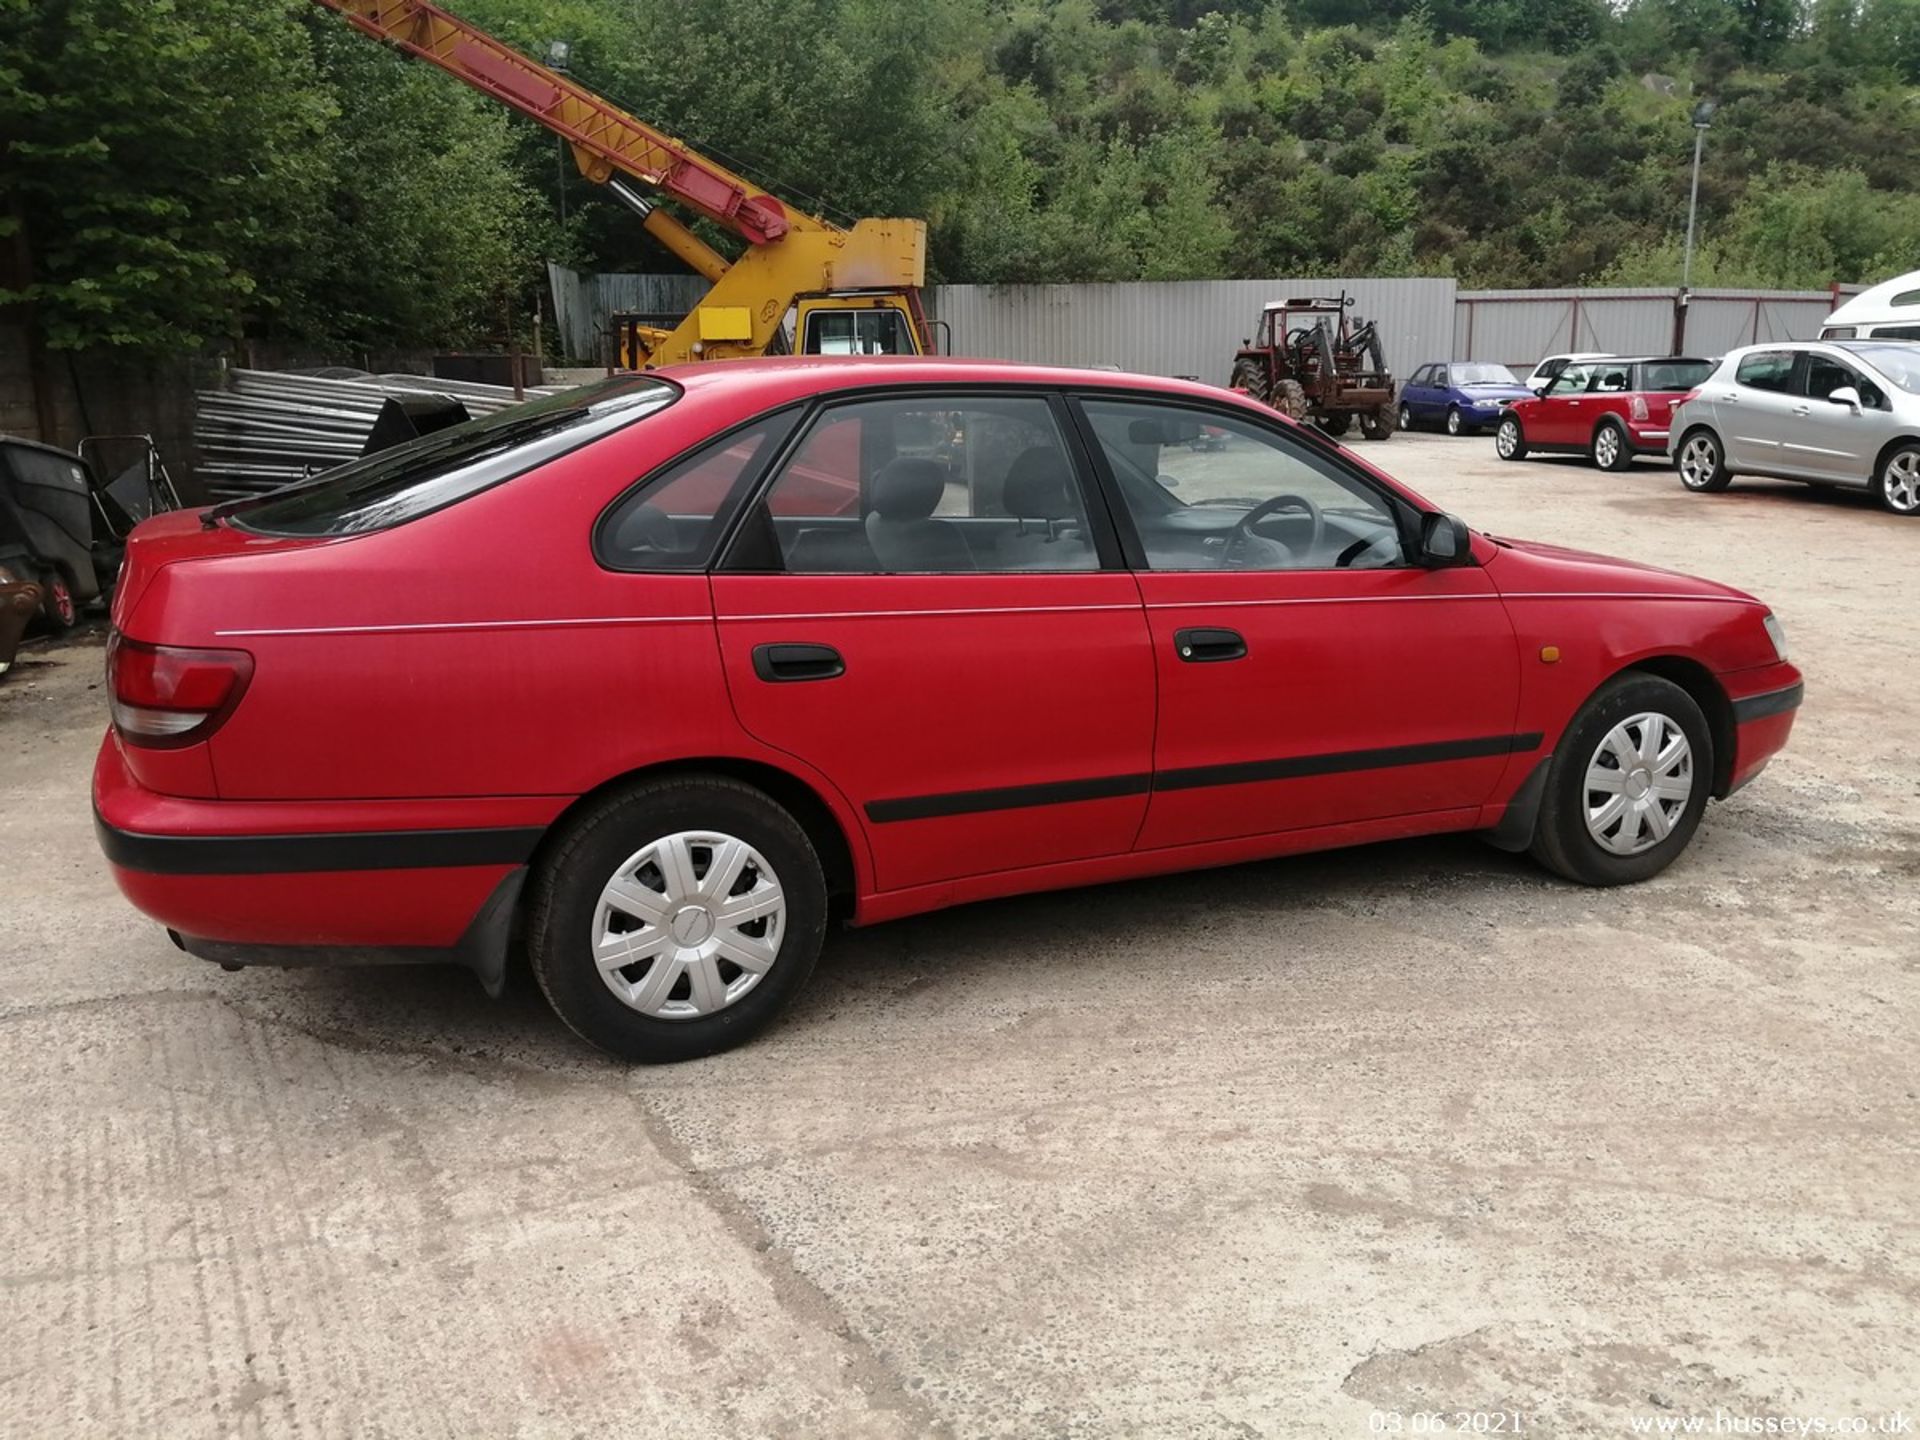 1993 TOYOTA CARINA E GLI AUTO - 1587cc 5dr Hatchback (Red) - Image 6 of 10